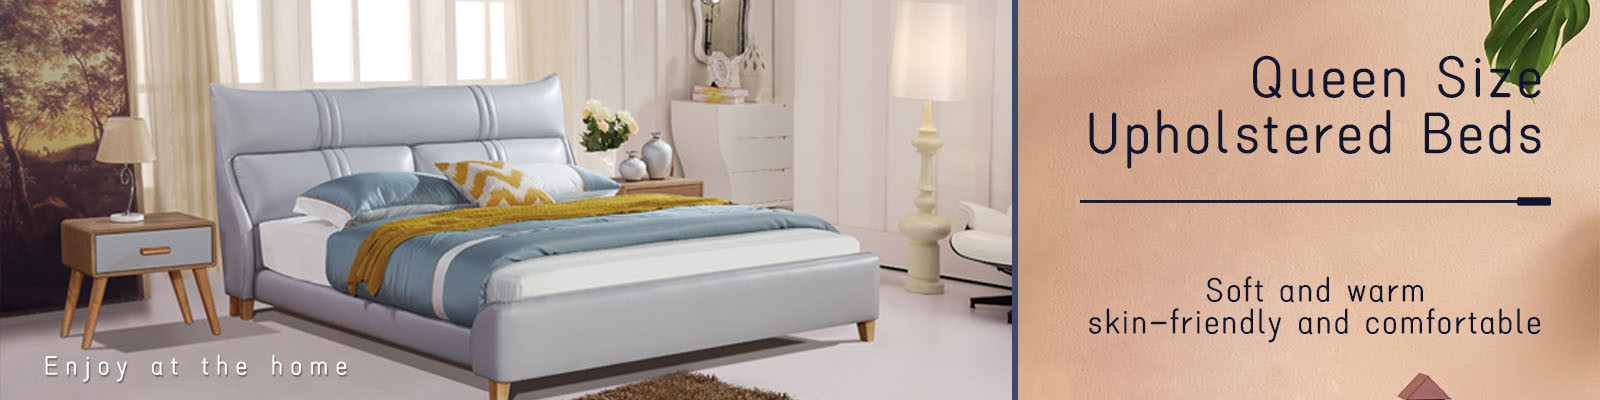 King Size Upholstered Beds